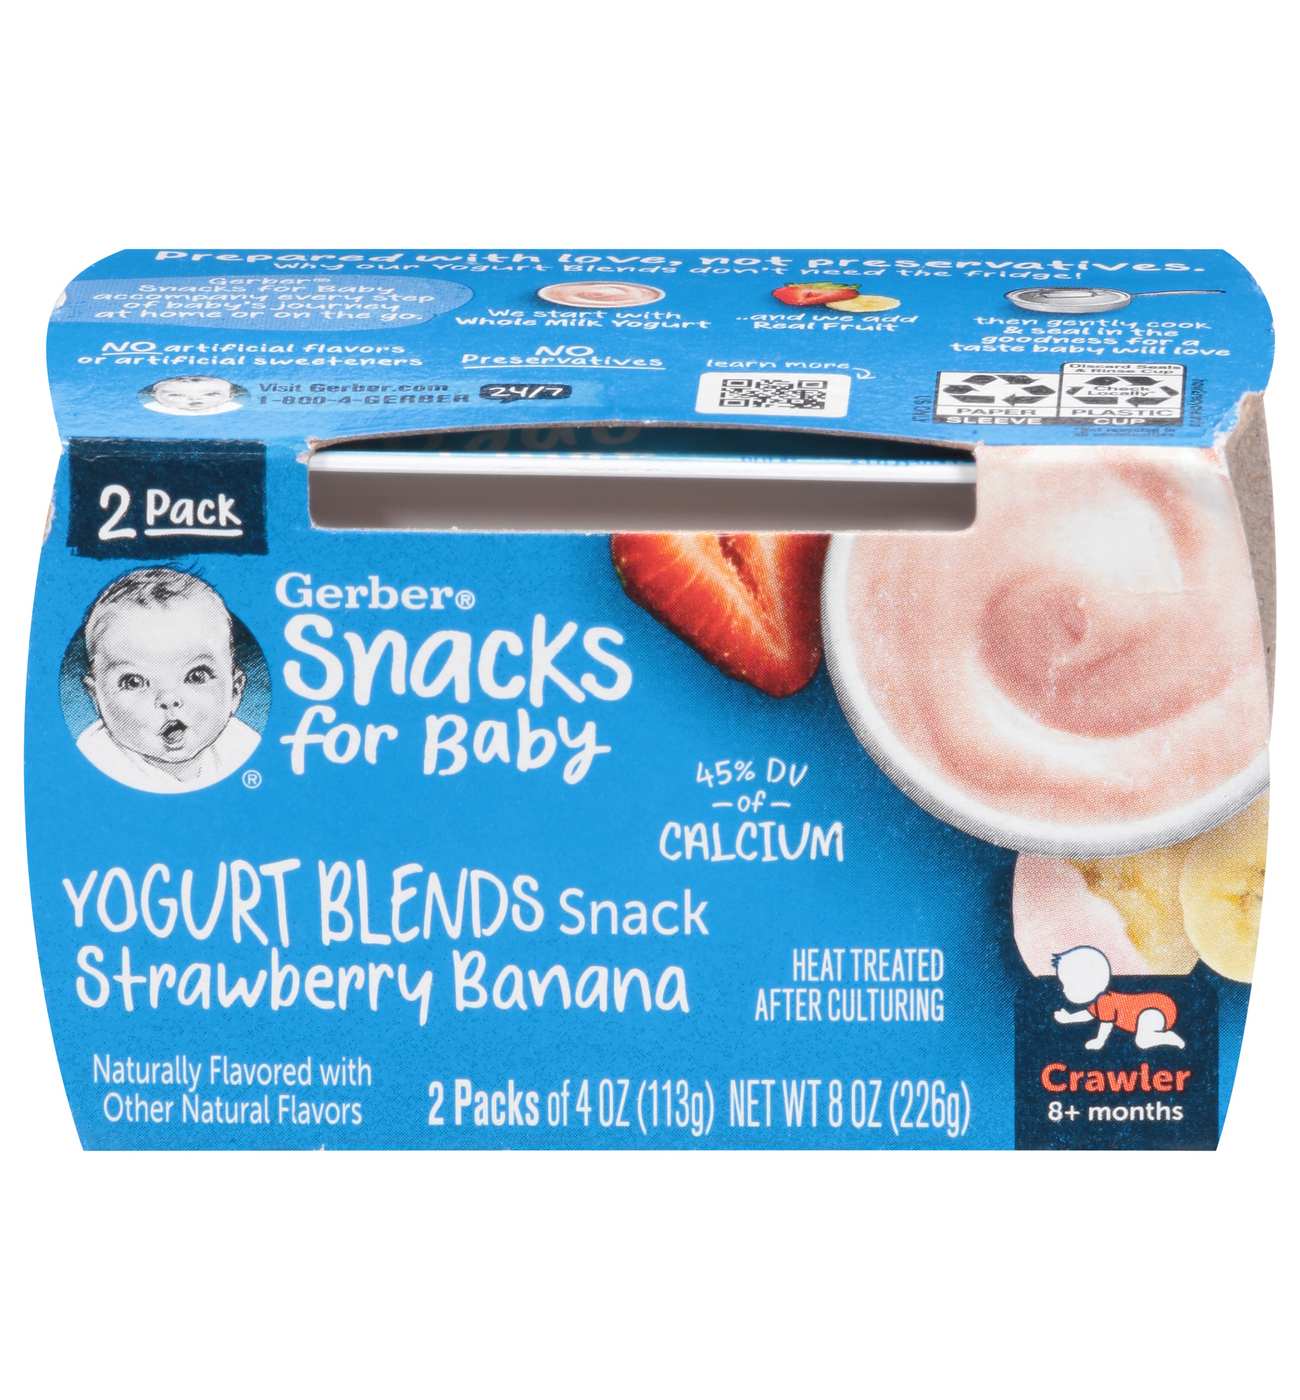 Gerber Snacks for Baby Yogurt Blend - Strawberry Banana; image 2 of 5